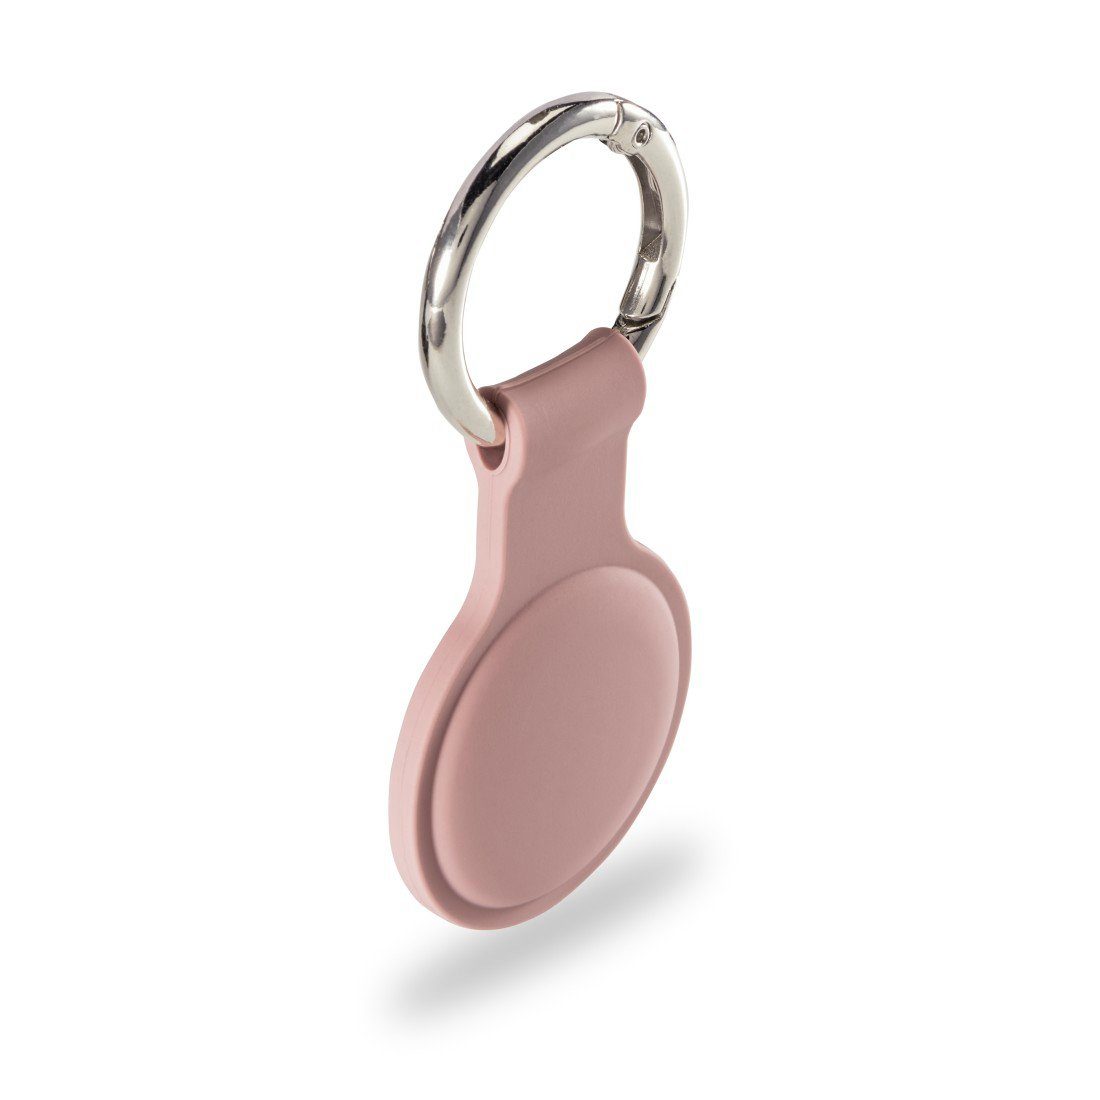 Schutzhülle Cover Case für BMW Schlüssel key inkl. Karabiner + Lederband,  rosa